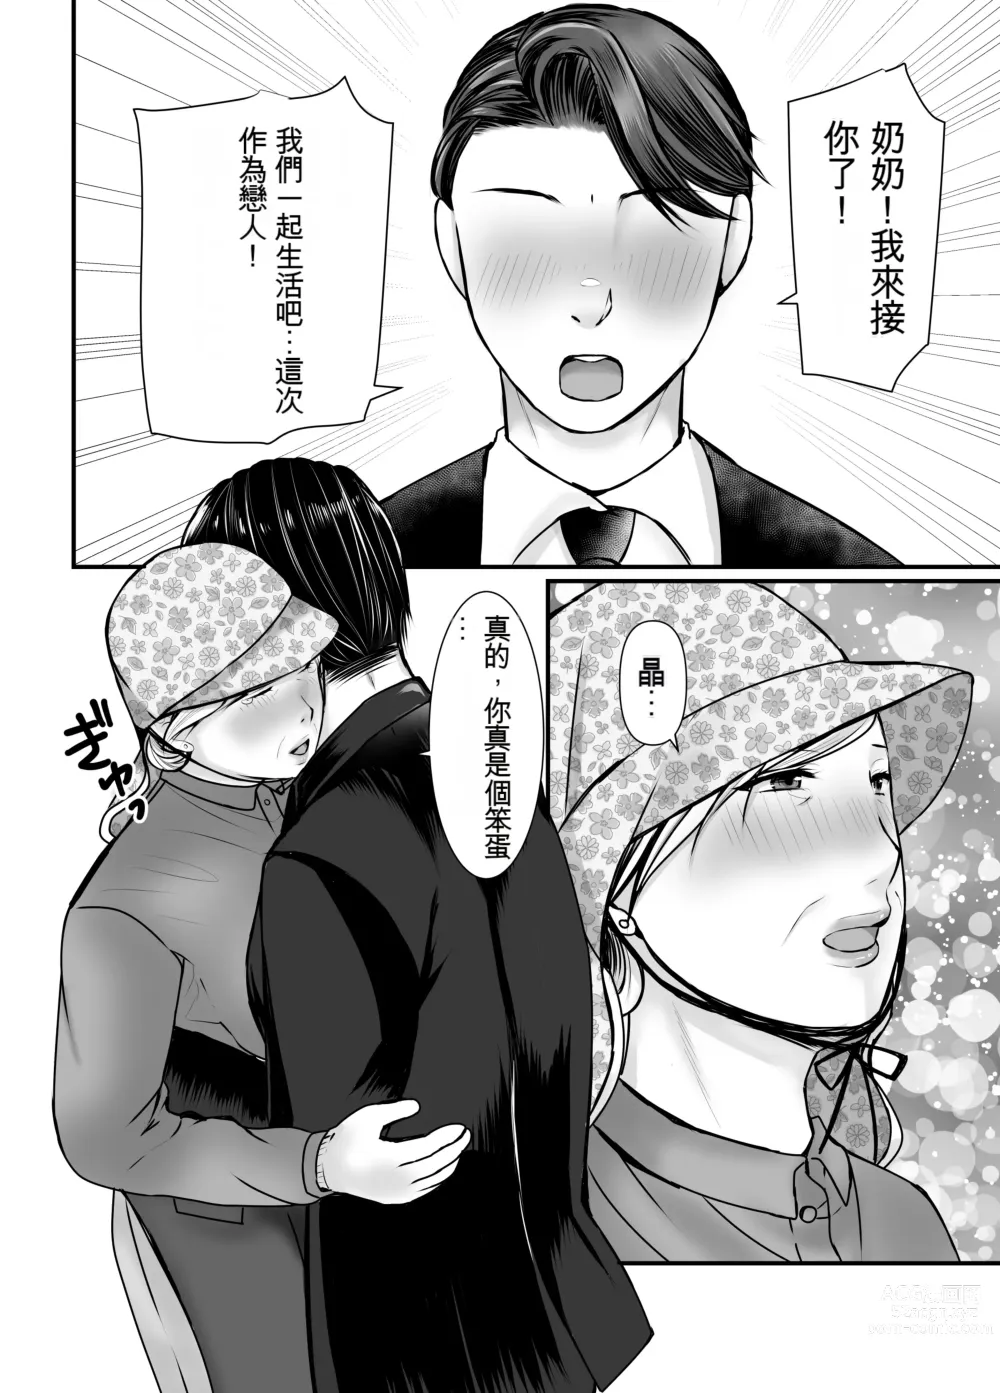 Page 57 of manga 祖母與孫子 ~孫子的第一次被內射的那一天~